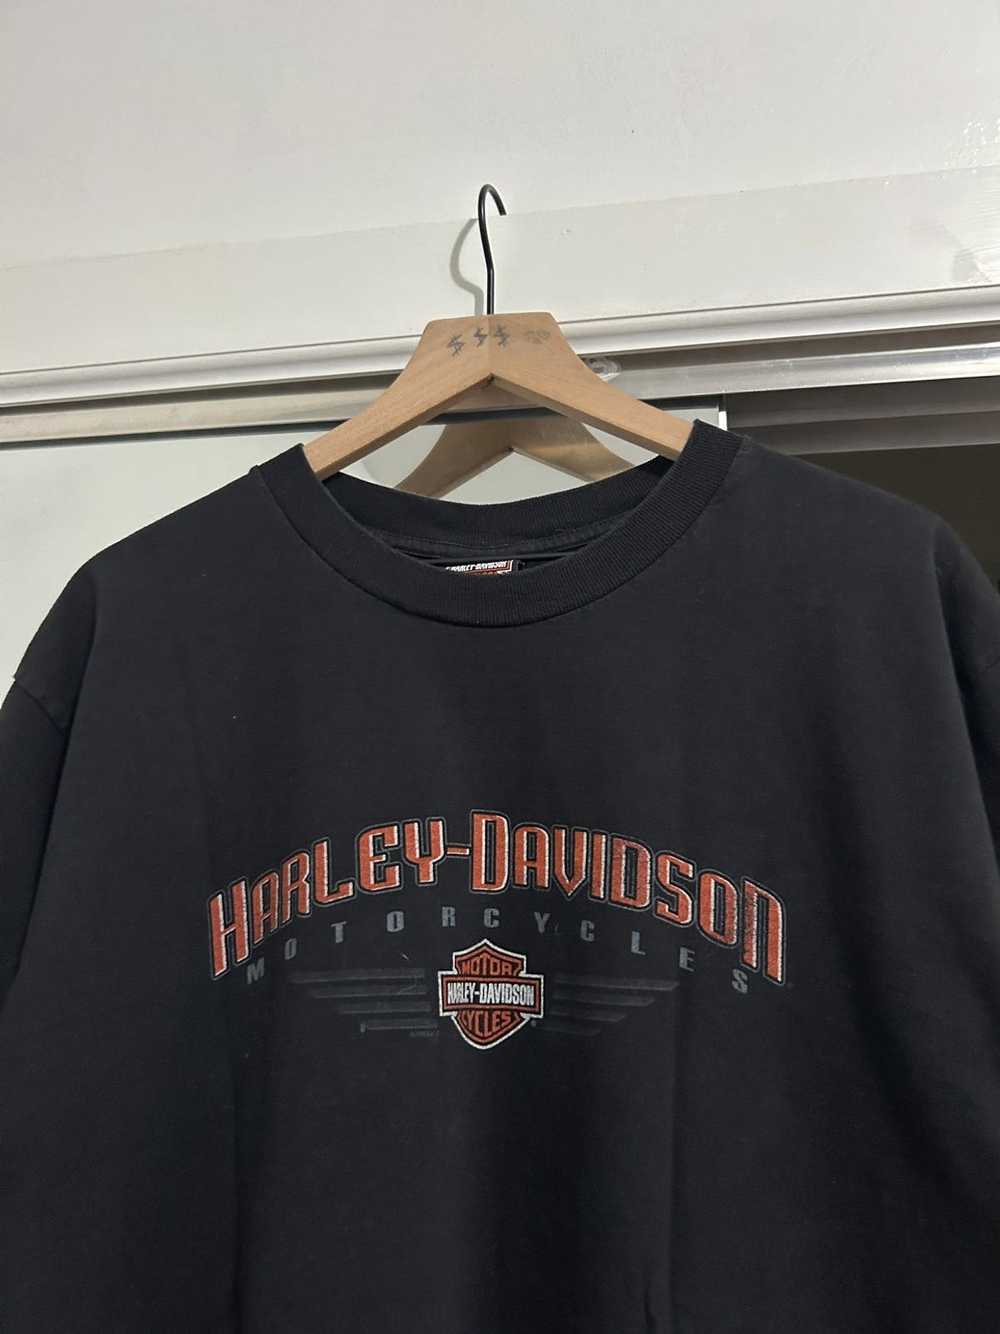 Harley Davidson Harley Davidson Bald Eagle Tee - image 4